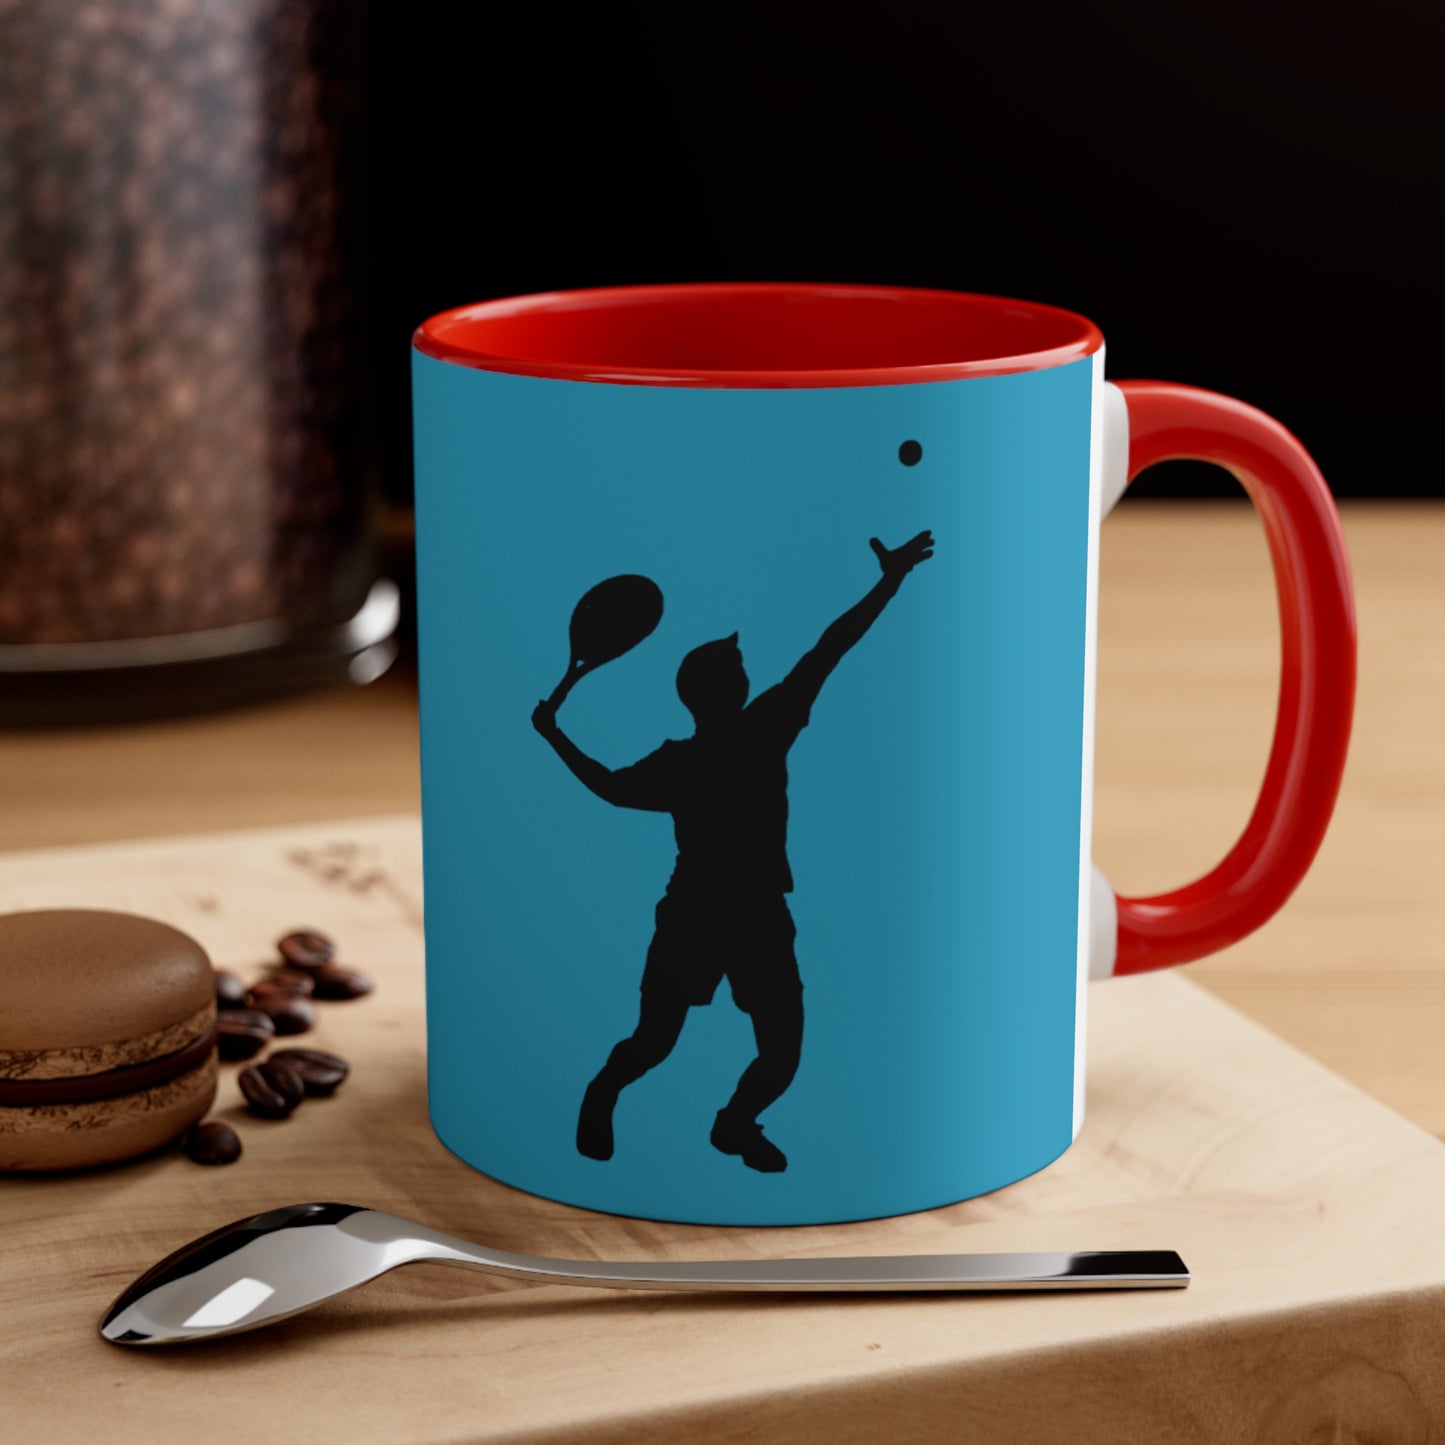 Accent Coffee Mug, 11oz: Tennis Turquoise